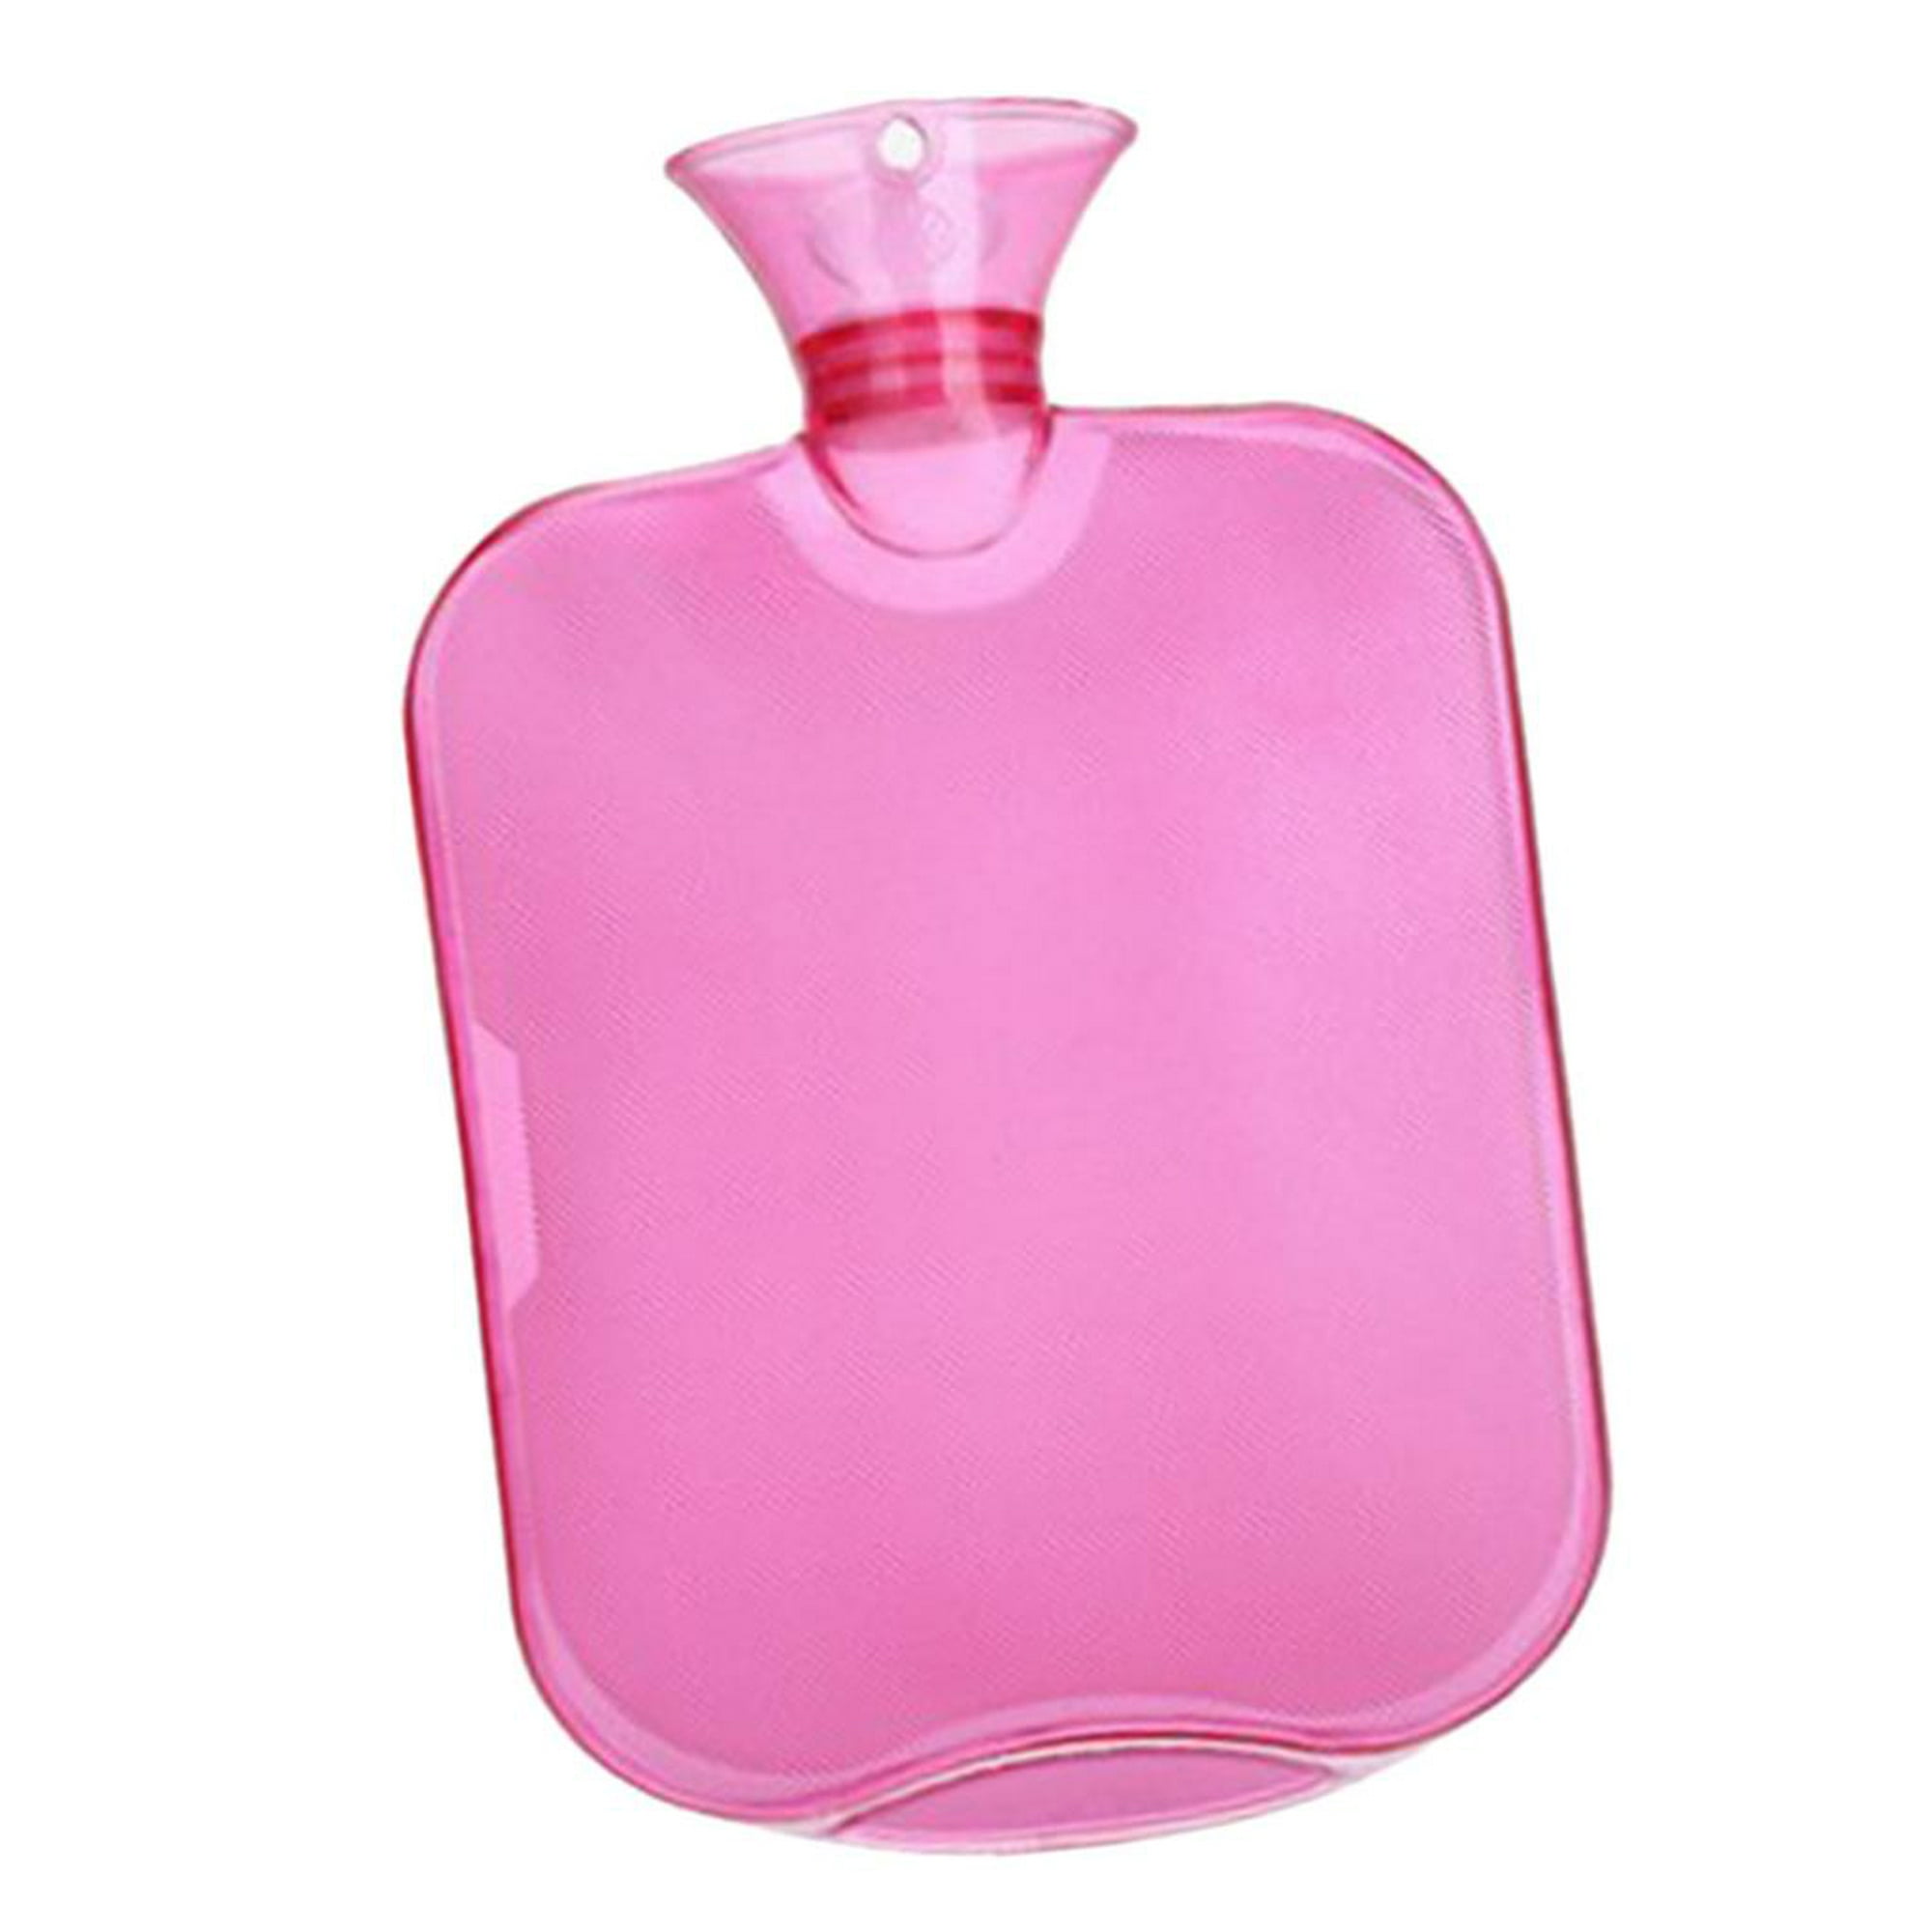 Bolsa de bolsa de agua caliente a prueba de fugas de de 1000 ml con  cubierta de tela para bolsa de hielo Rose Red 02 Yuyangstore Botella de  agua caliente